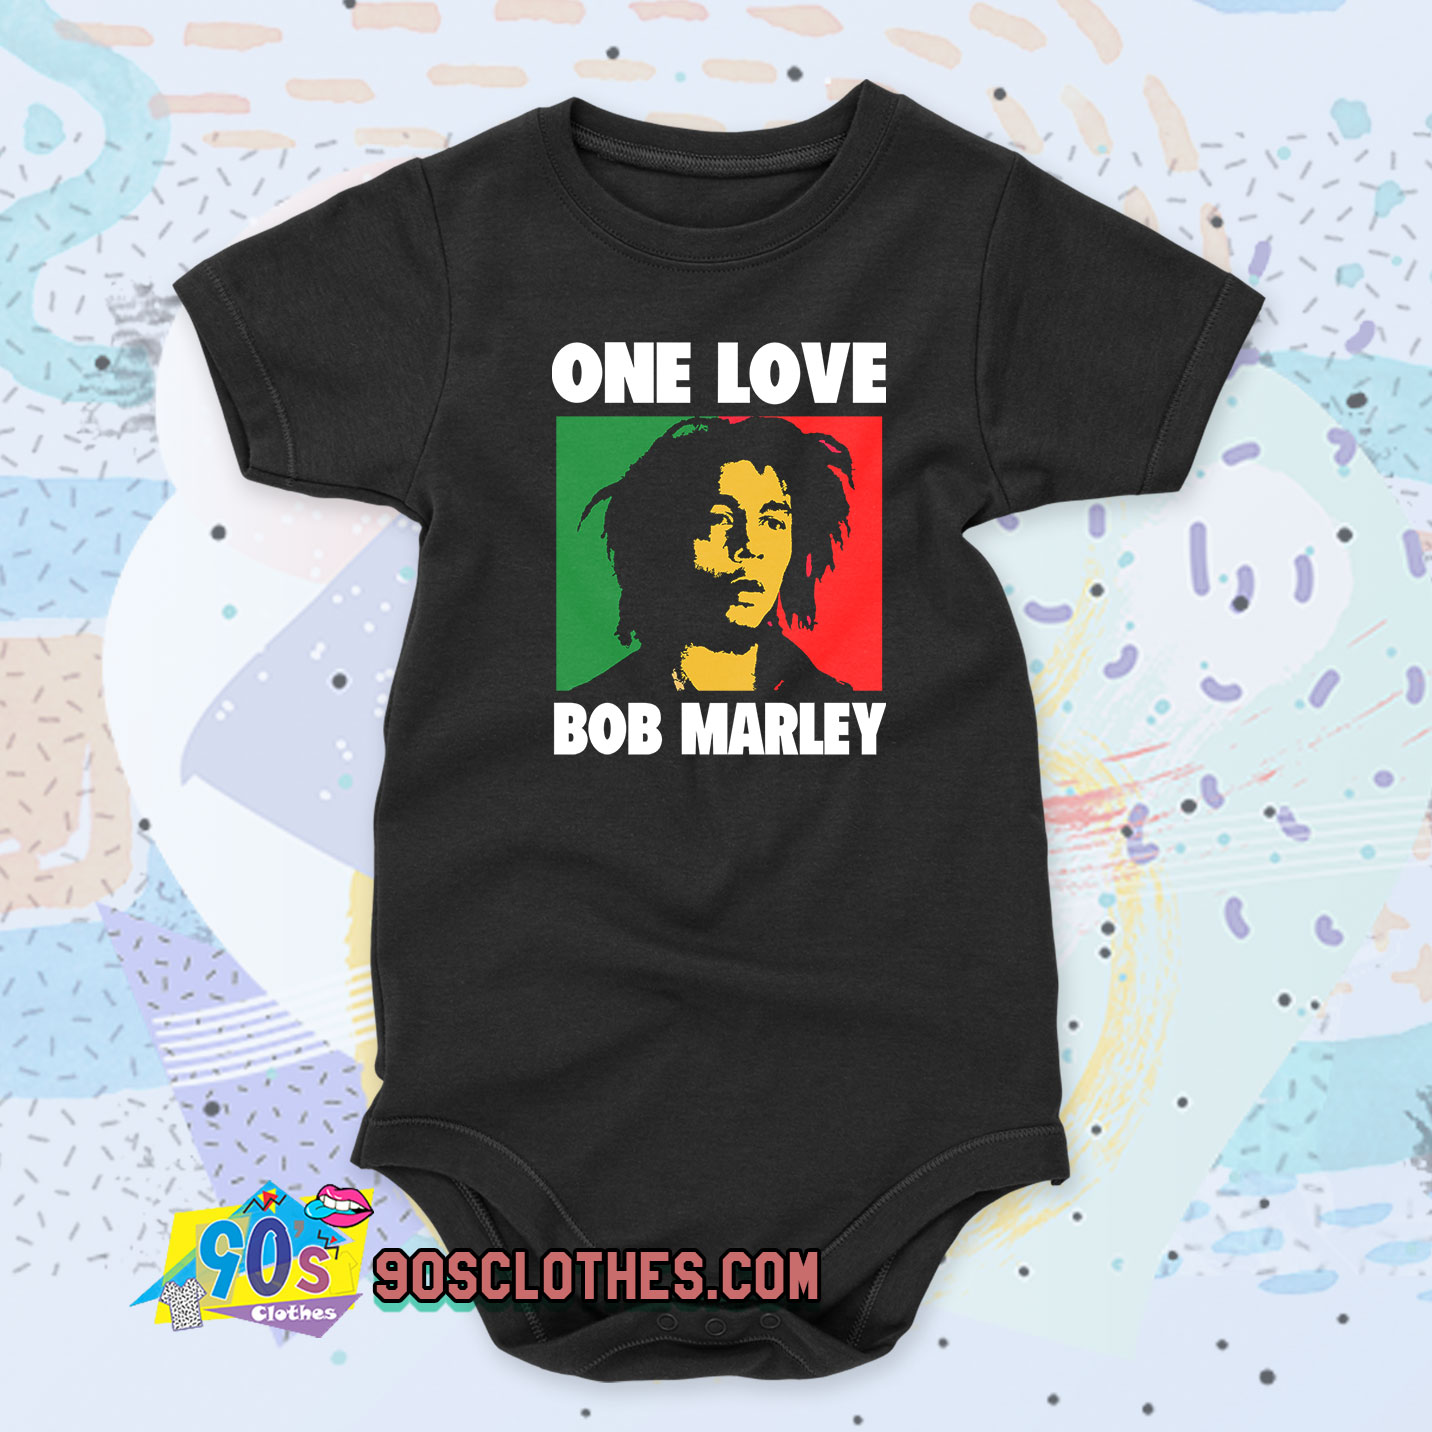 bob marley onesies for babies